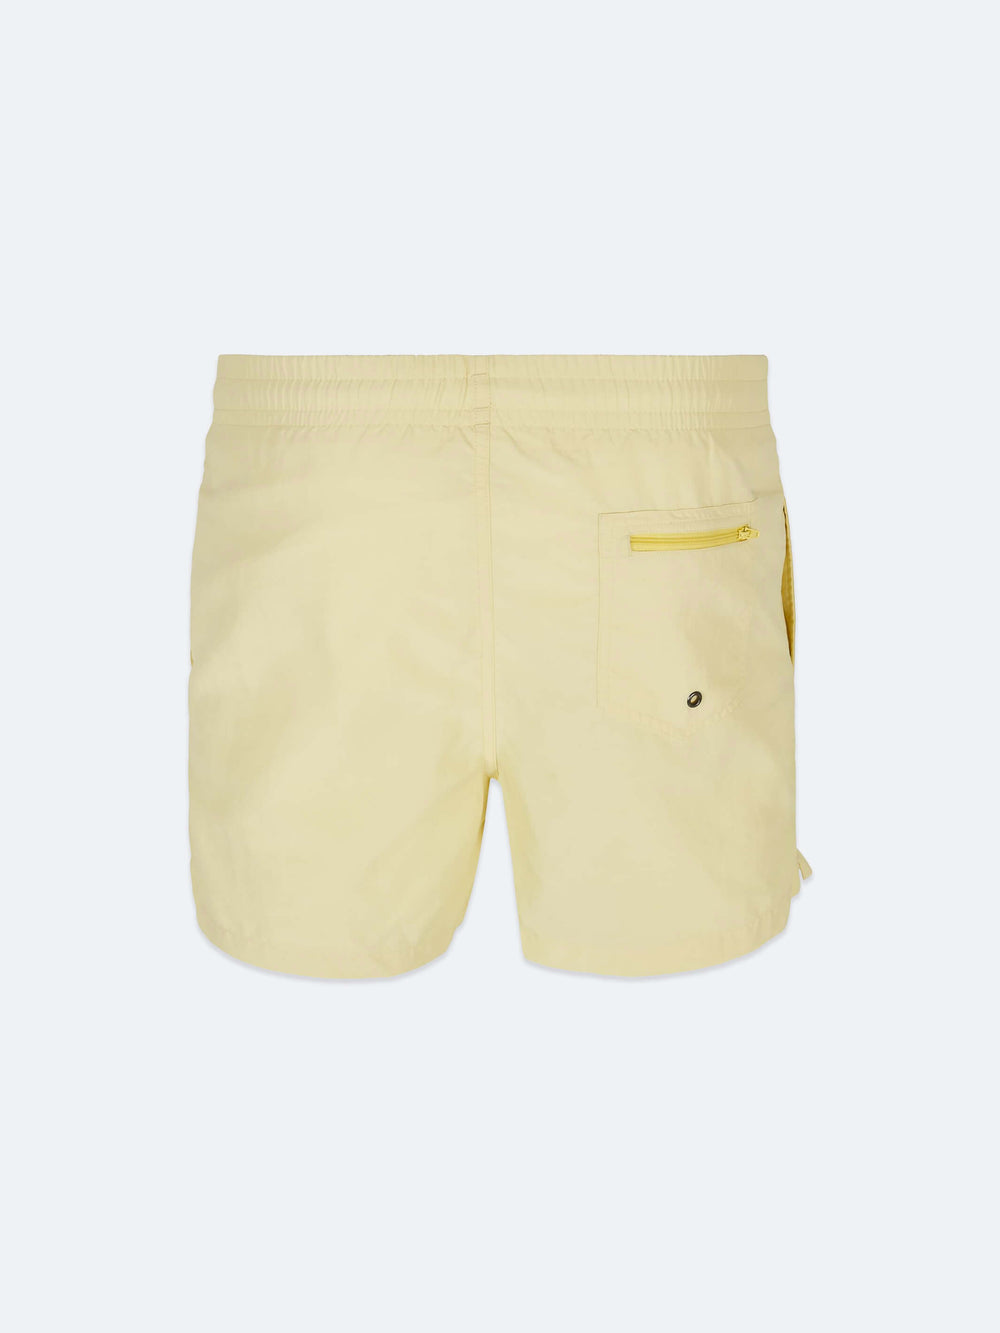 Boxed Swim Shorts (Light Yellow)